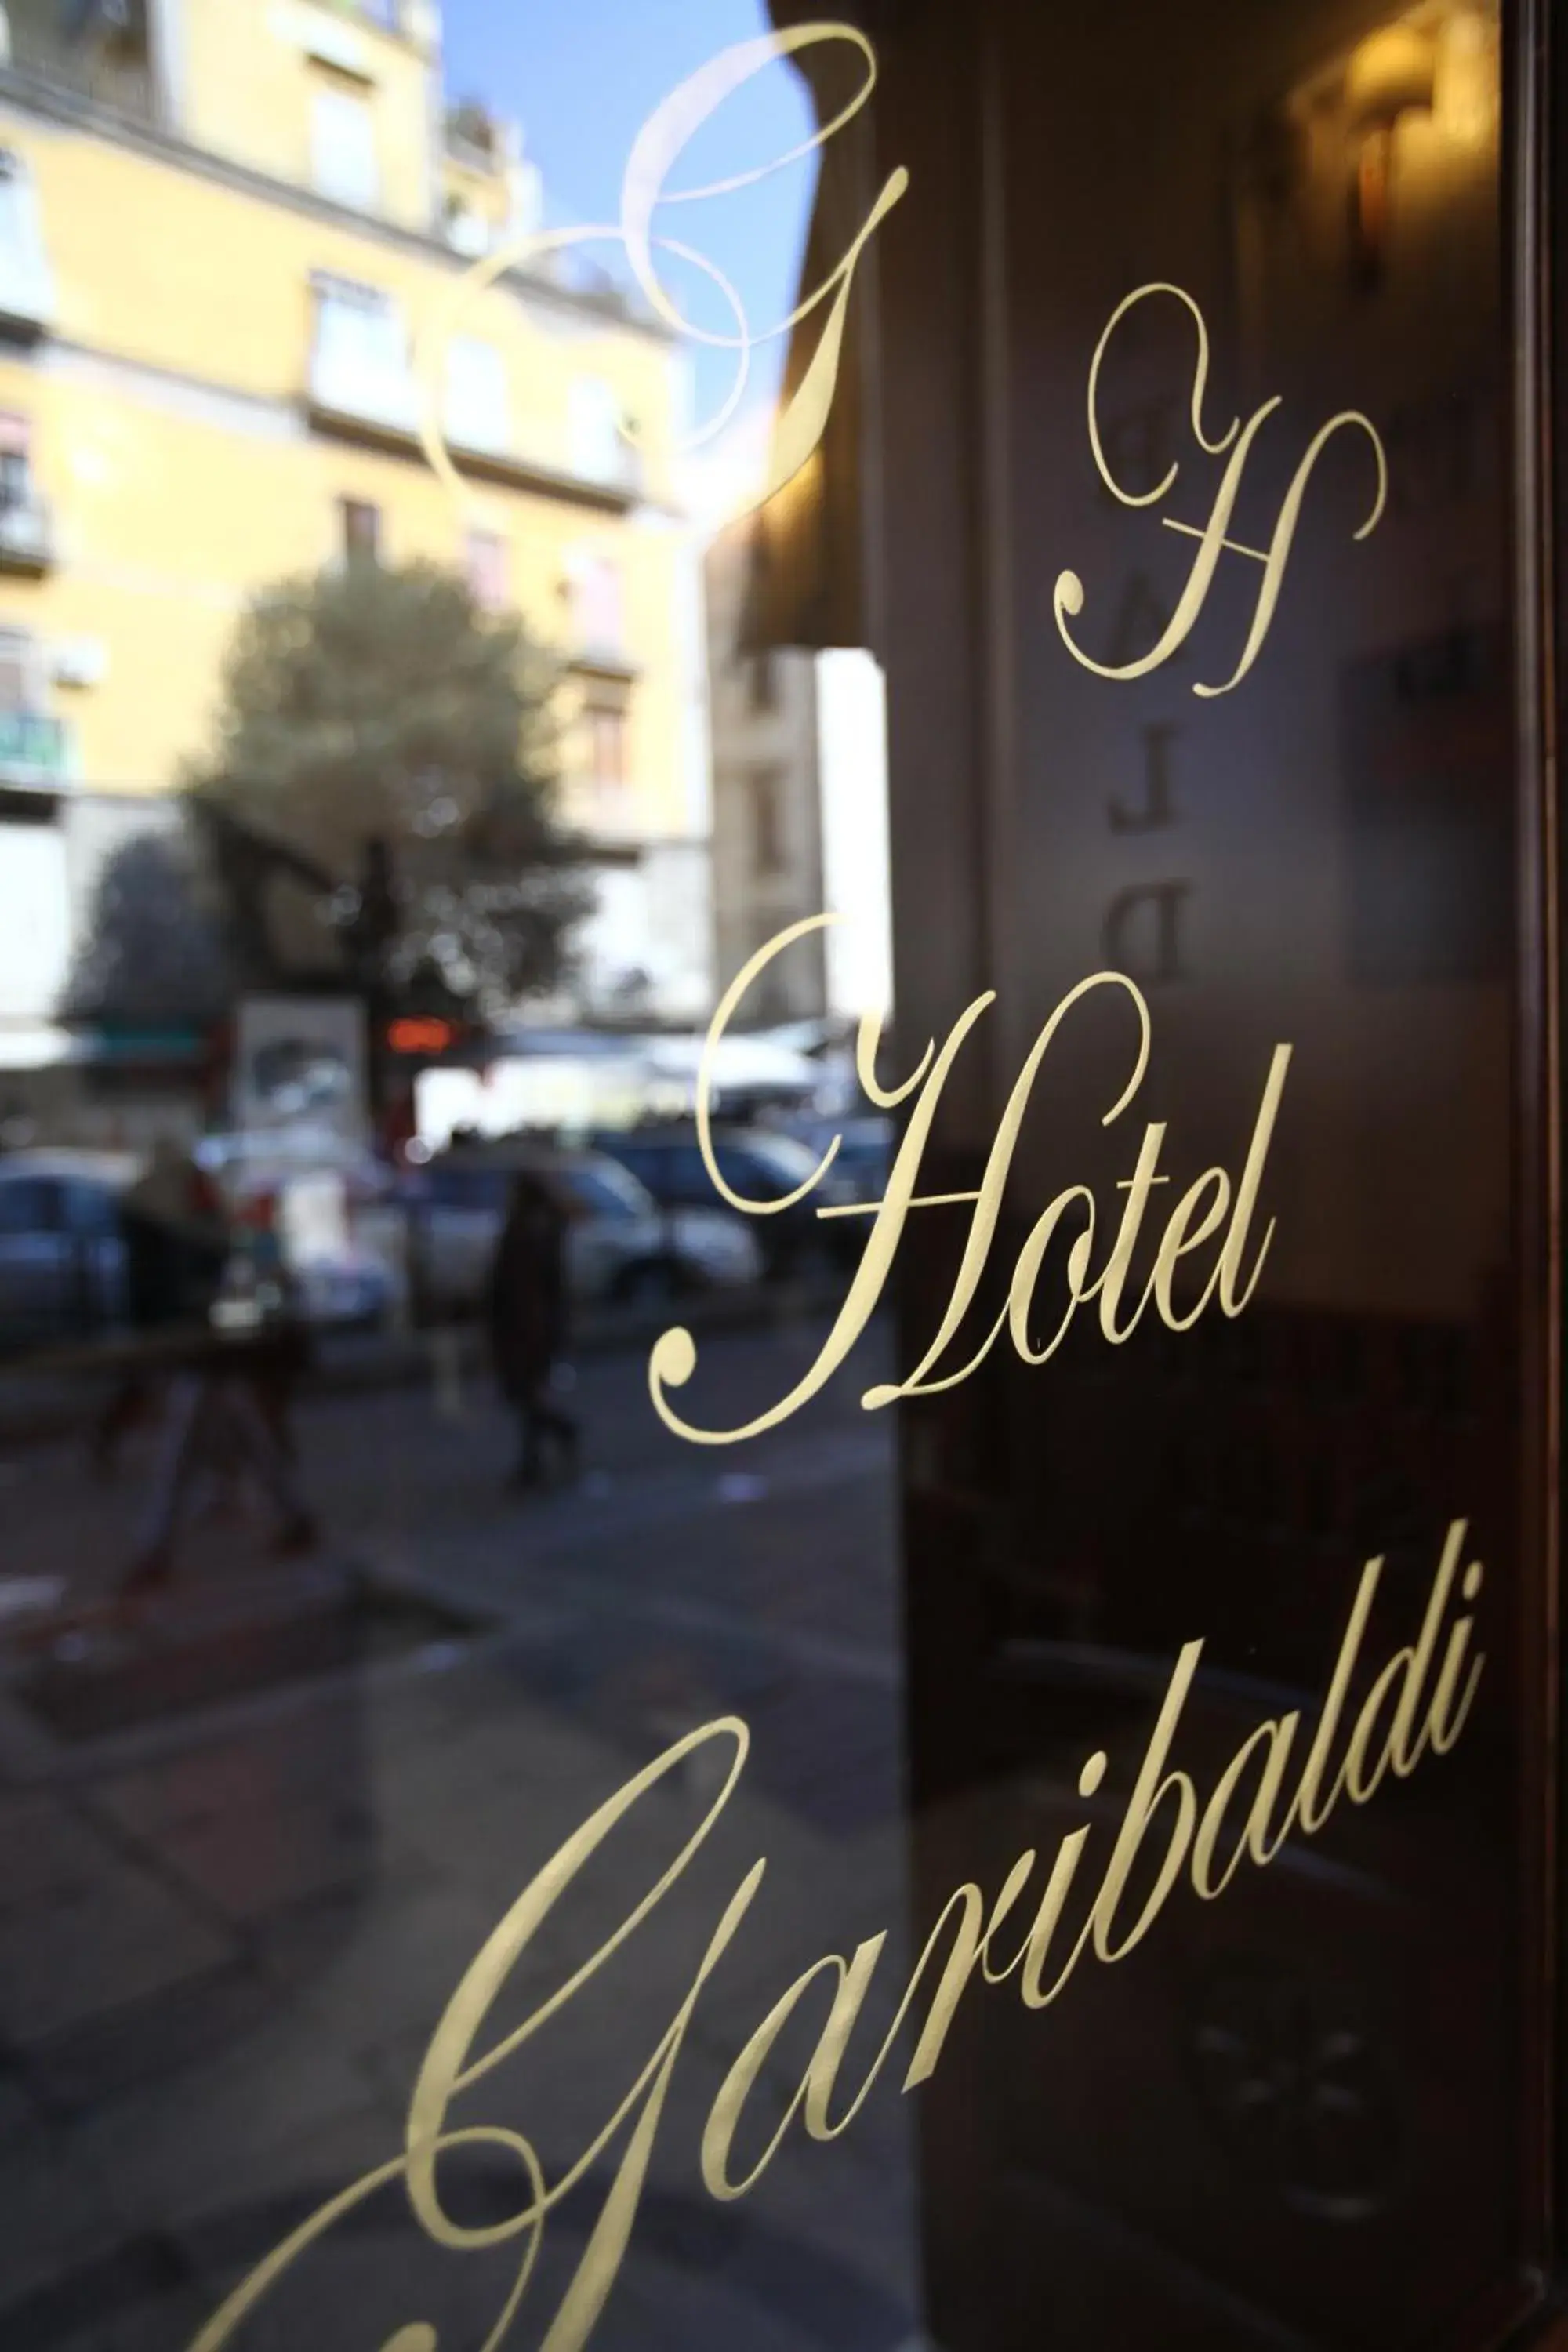 Facade/entrance in Hotel Garibaldi